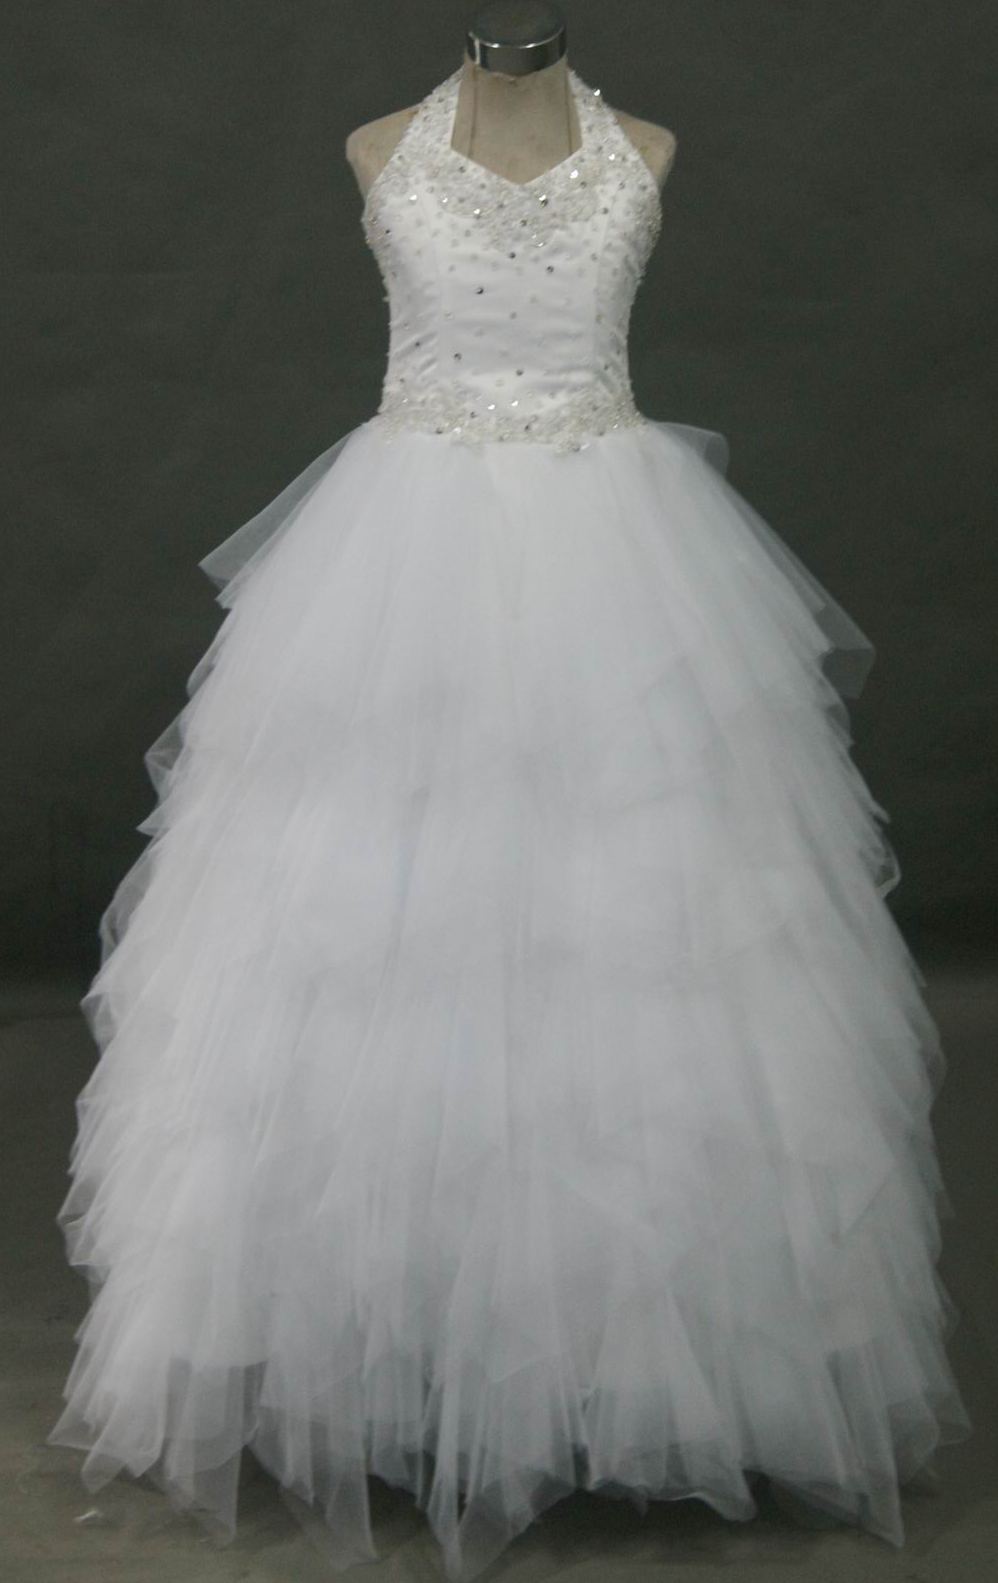 pageant dress with handkerchief hemline